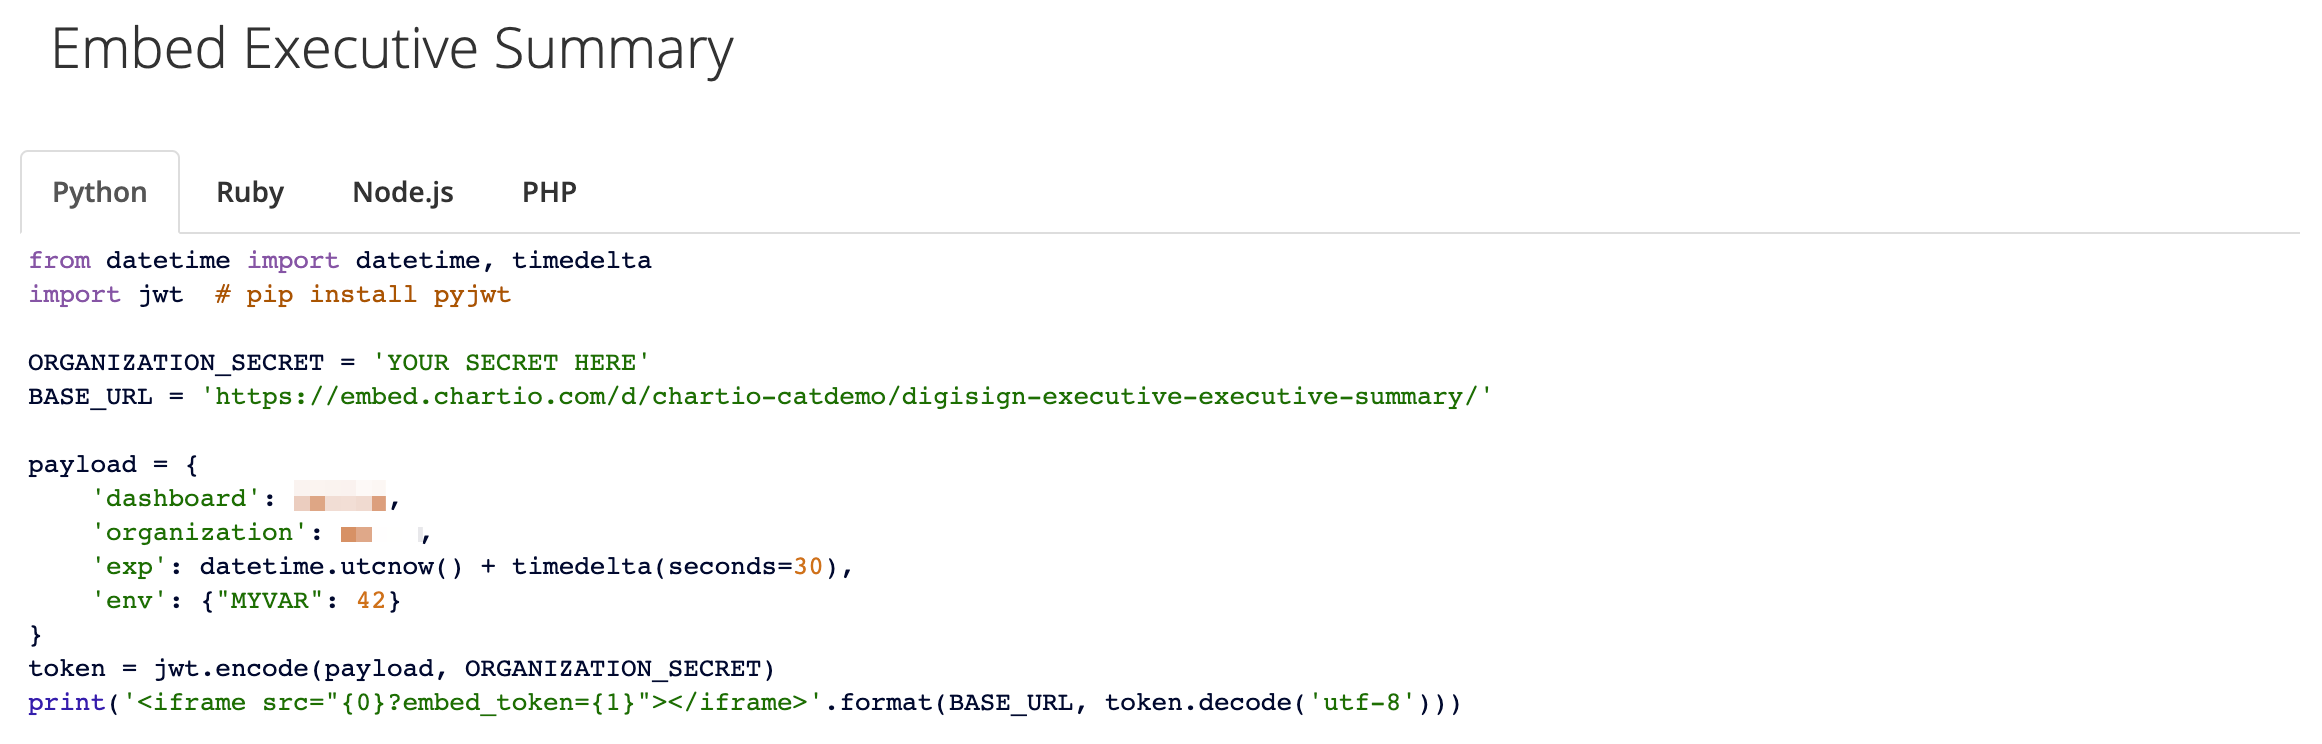 Embedding example code for the Executive Summary dashboard